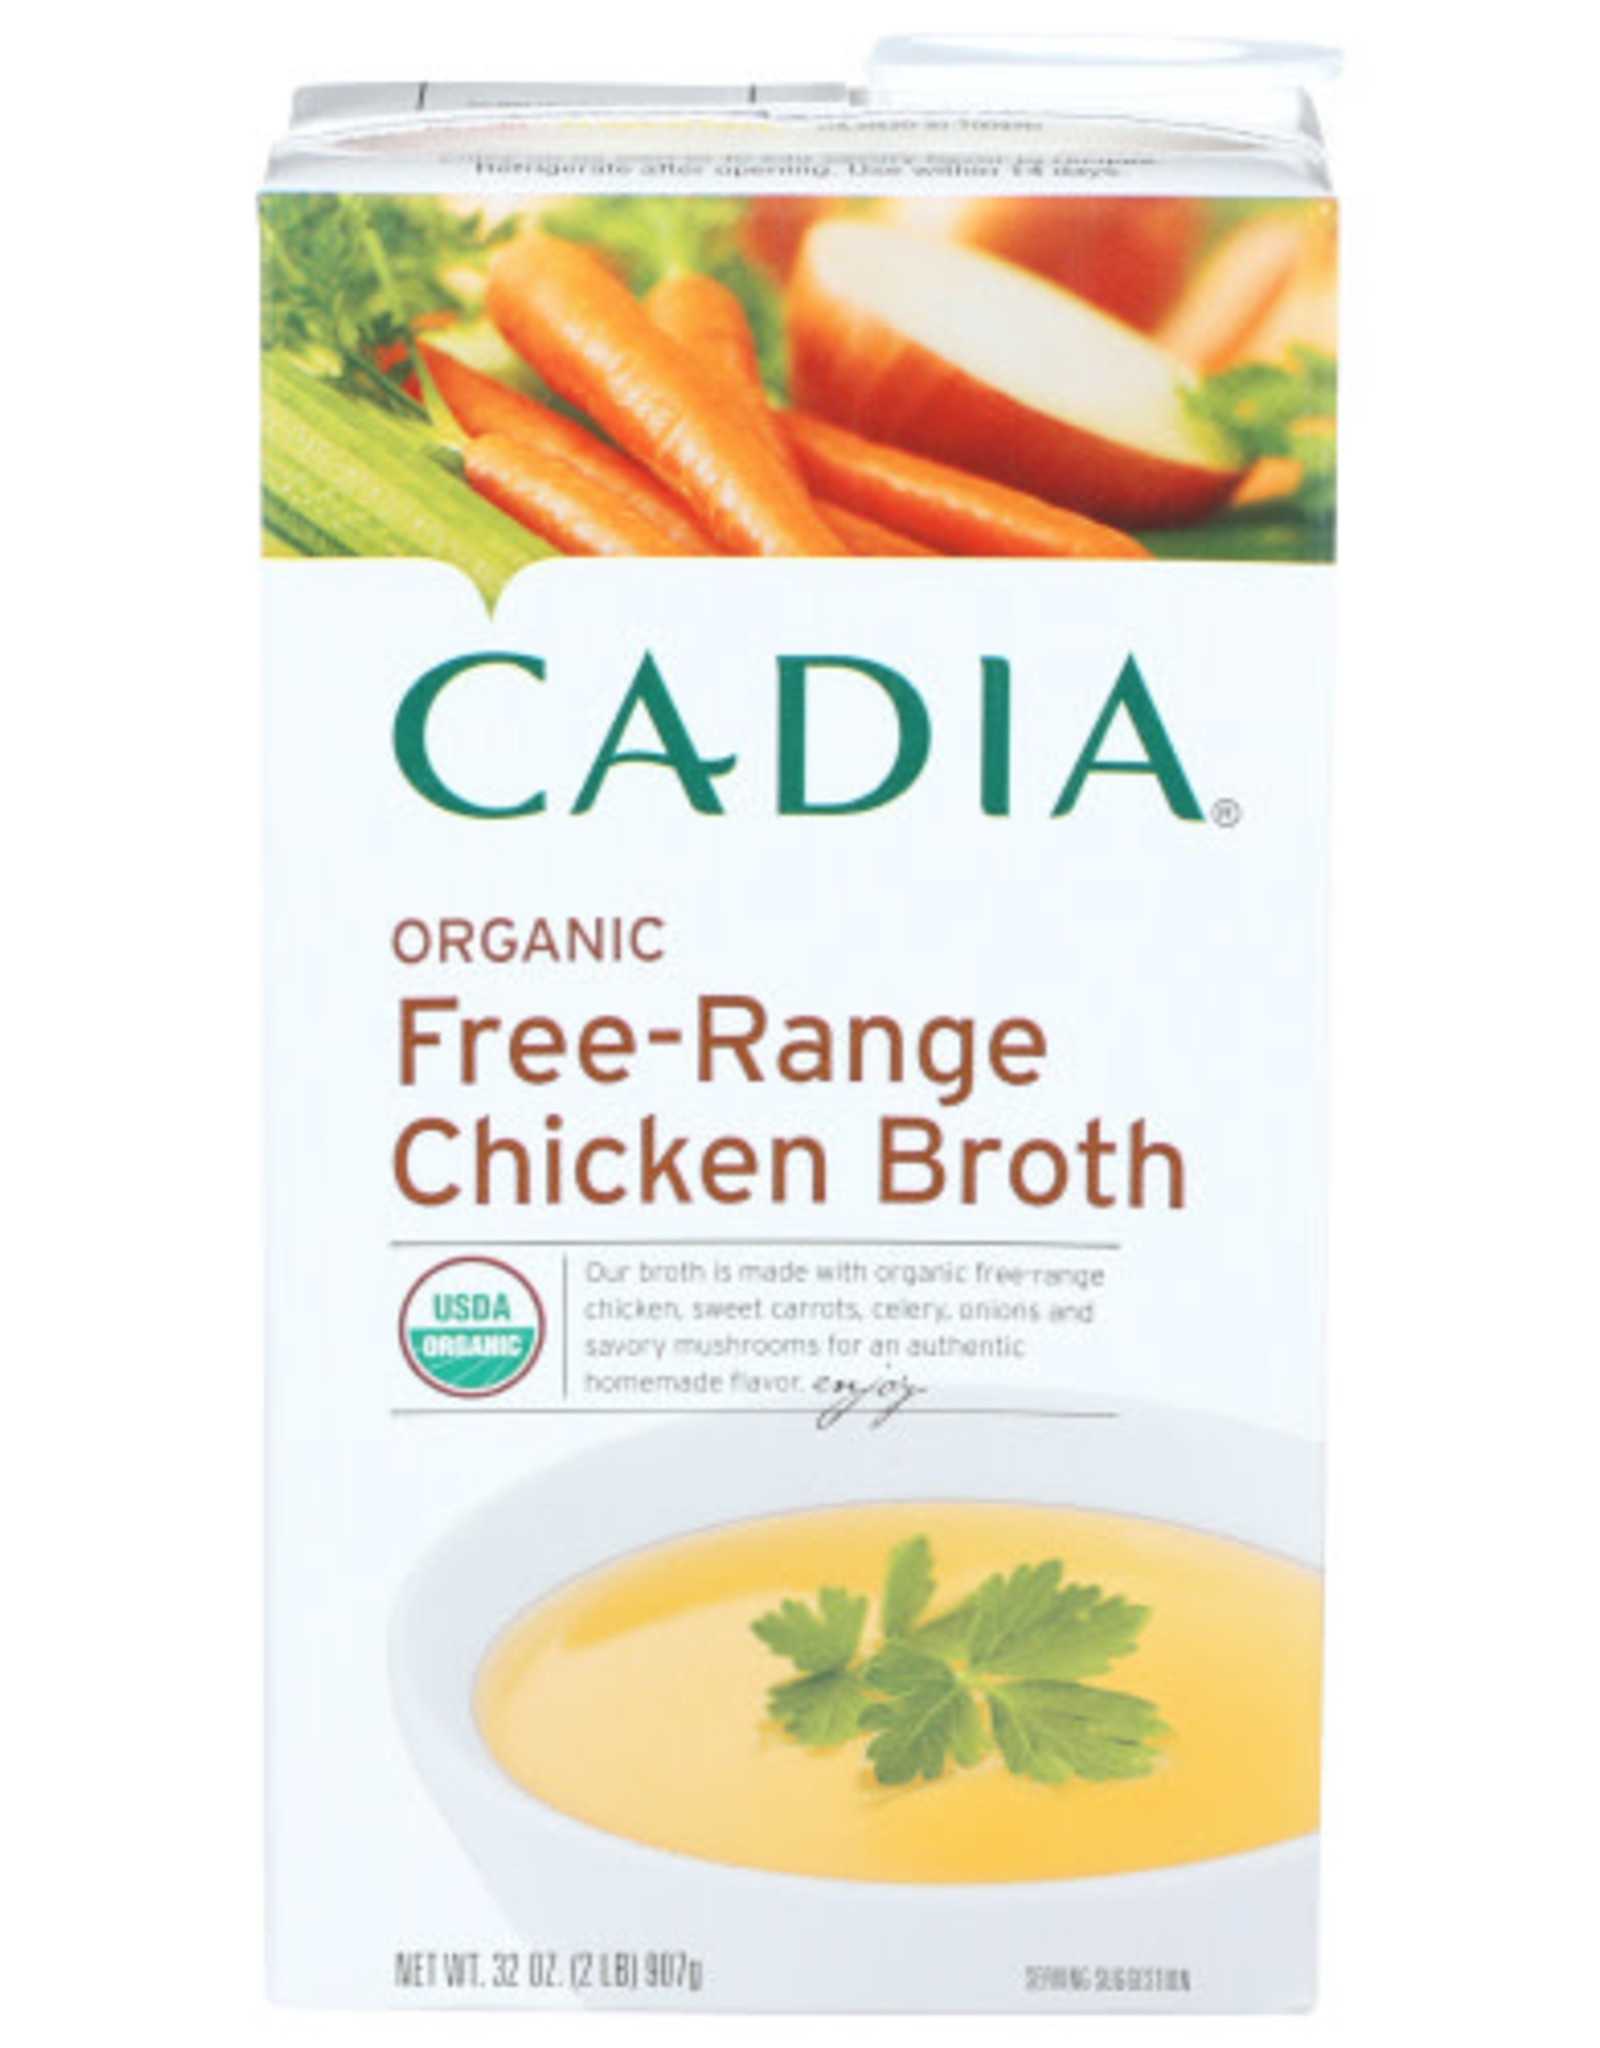 Organic Free Range Chicken Broth